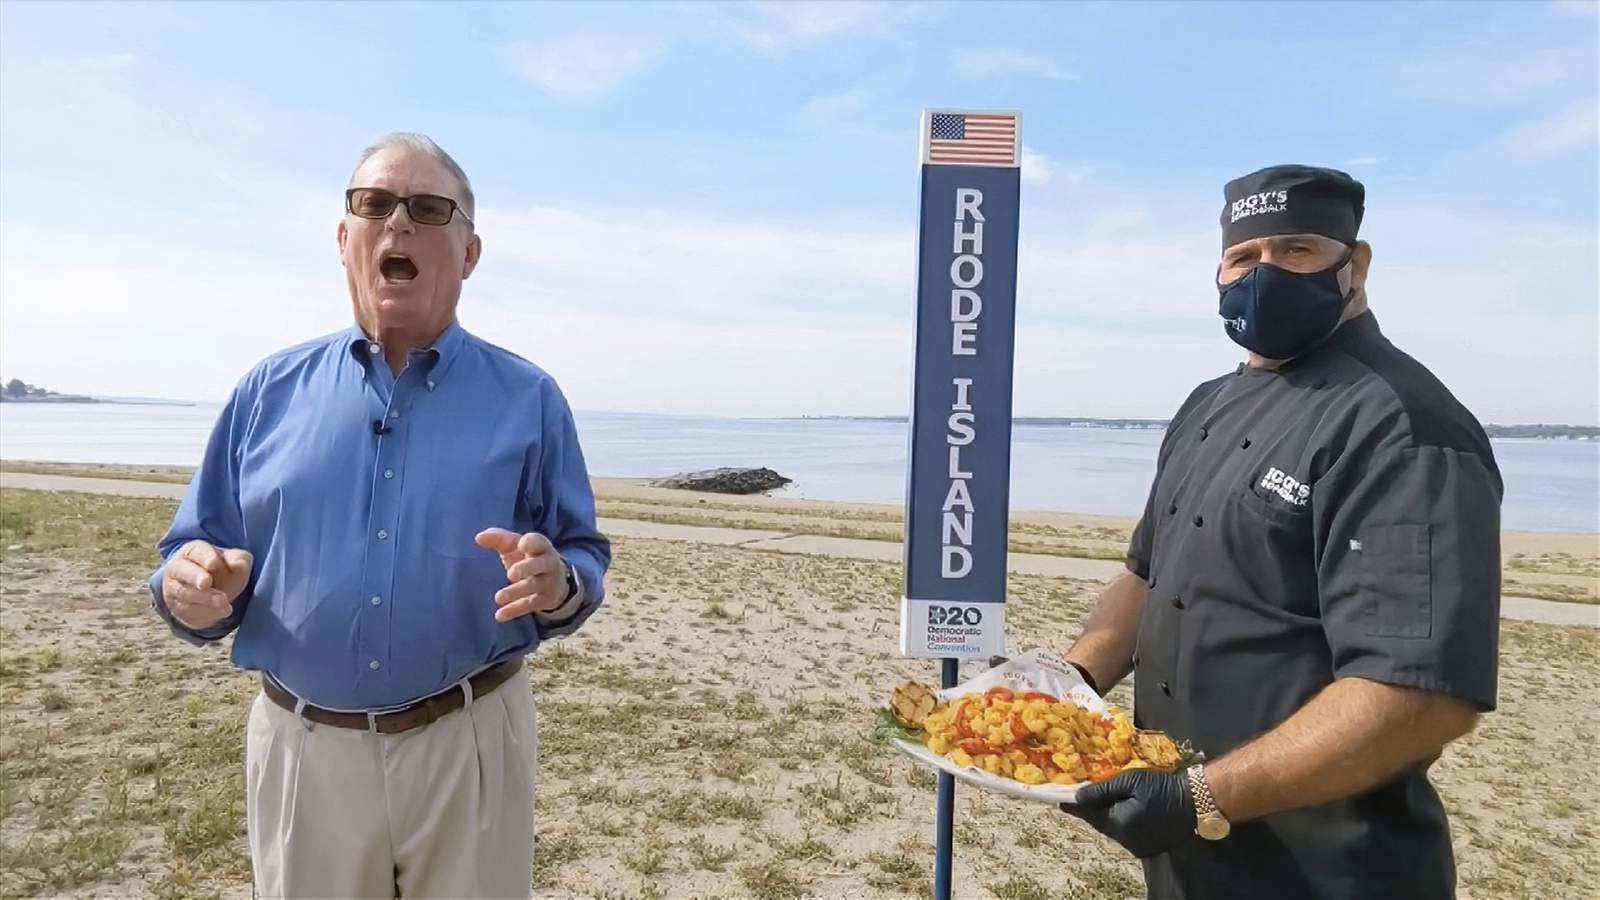 'Calamari comeback': Tiniest state's DNC video gets big buzz